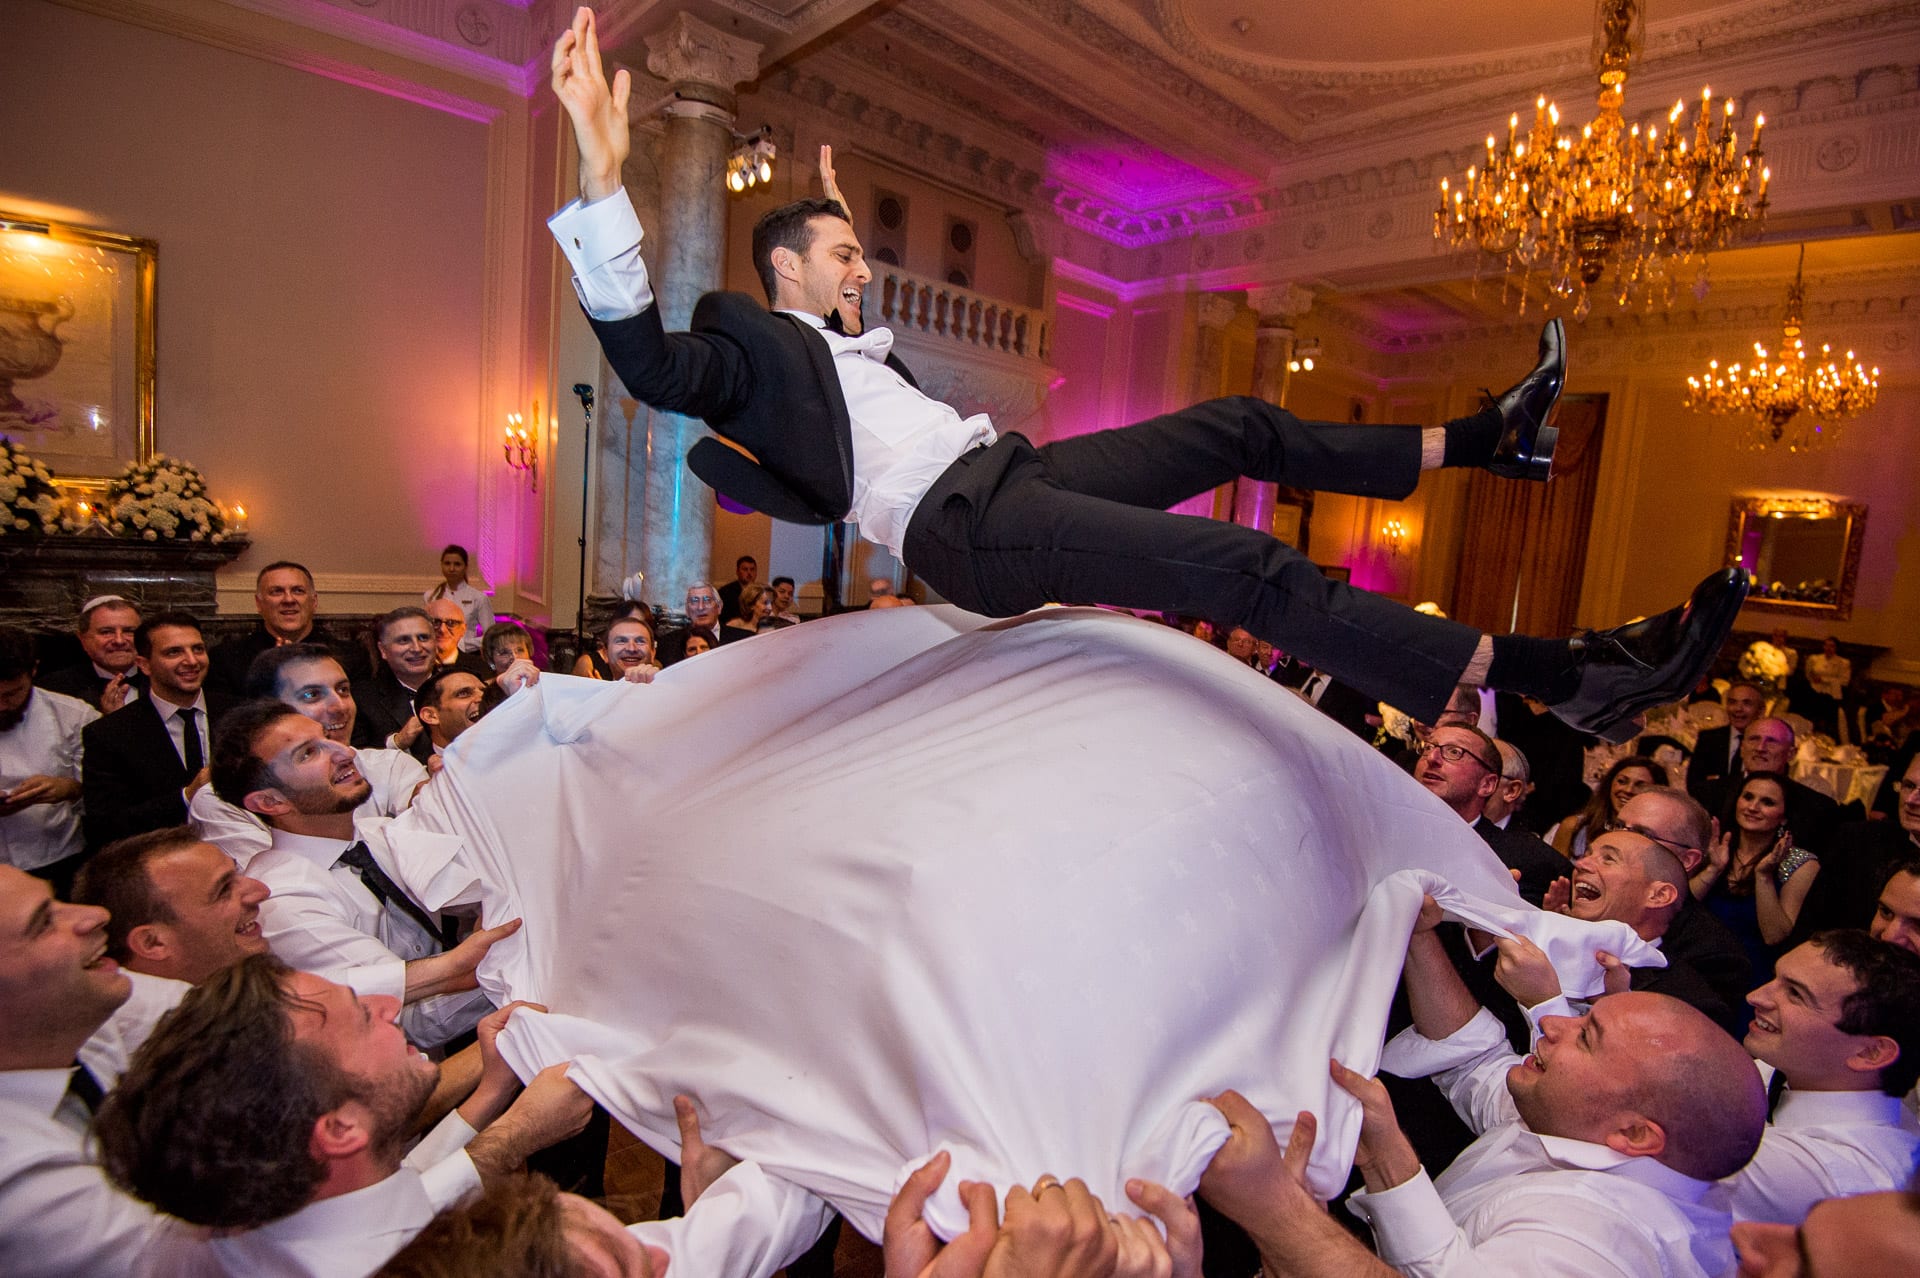 Jewish dancing at The Landmark hotel